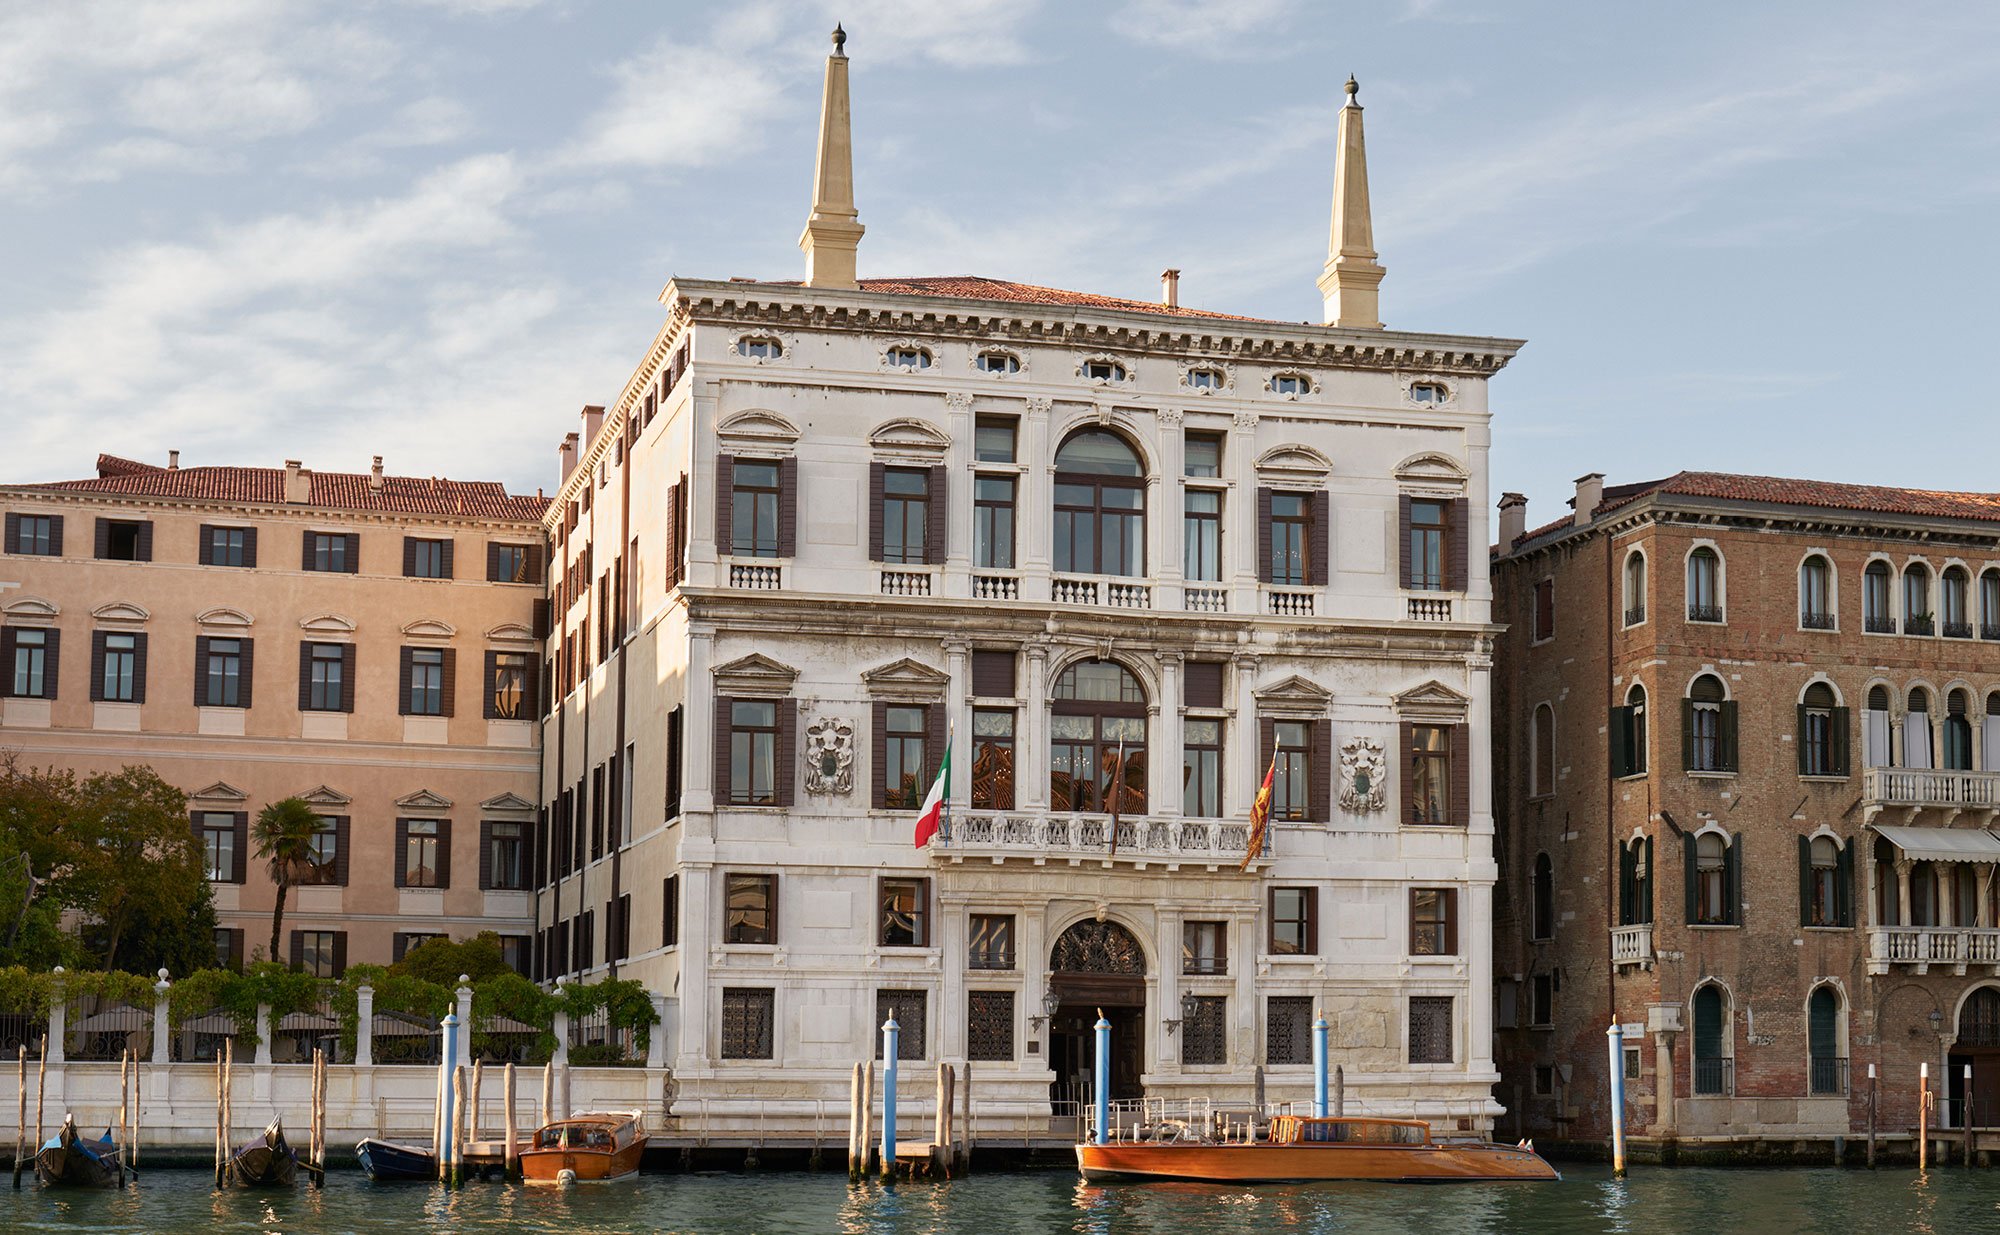 Aman Venice - Papadopoli Palazzo, Grand Canal, Italy - Aman